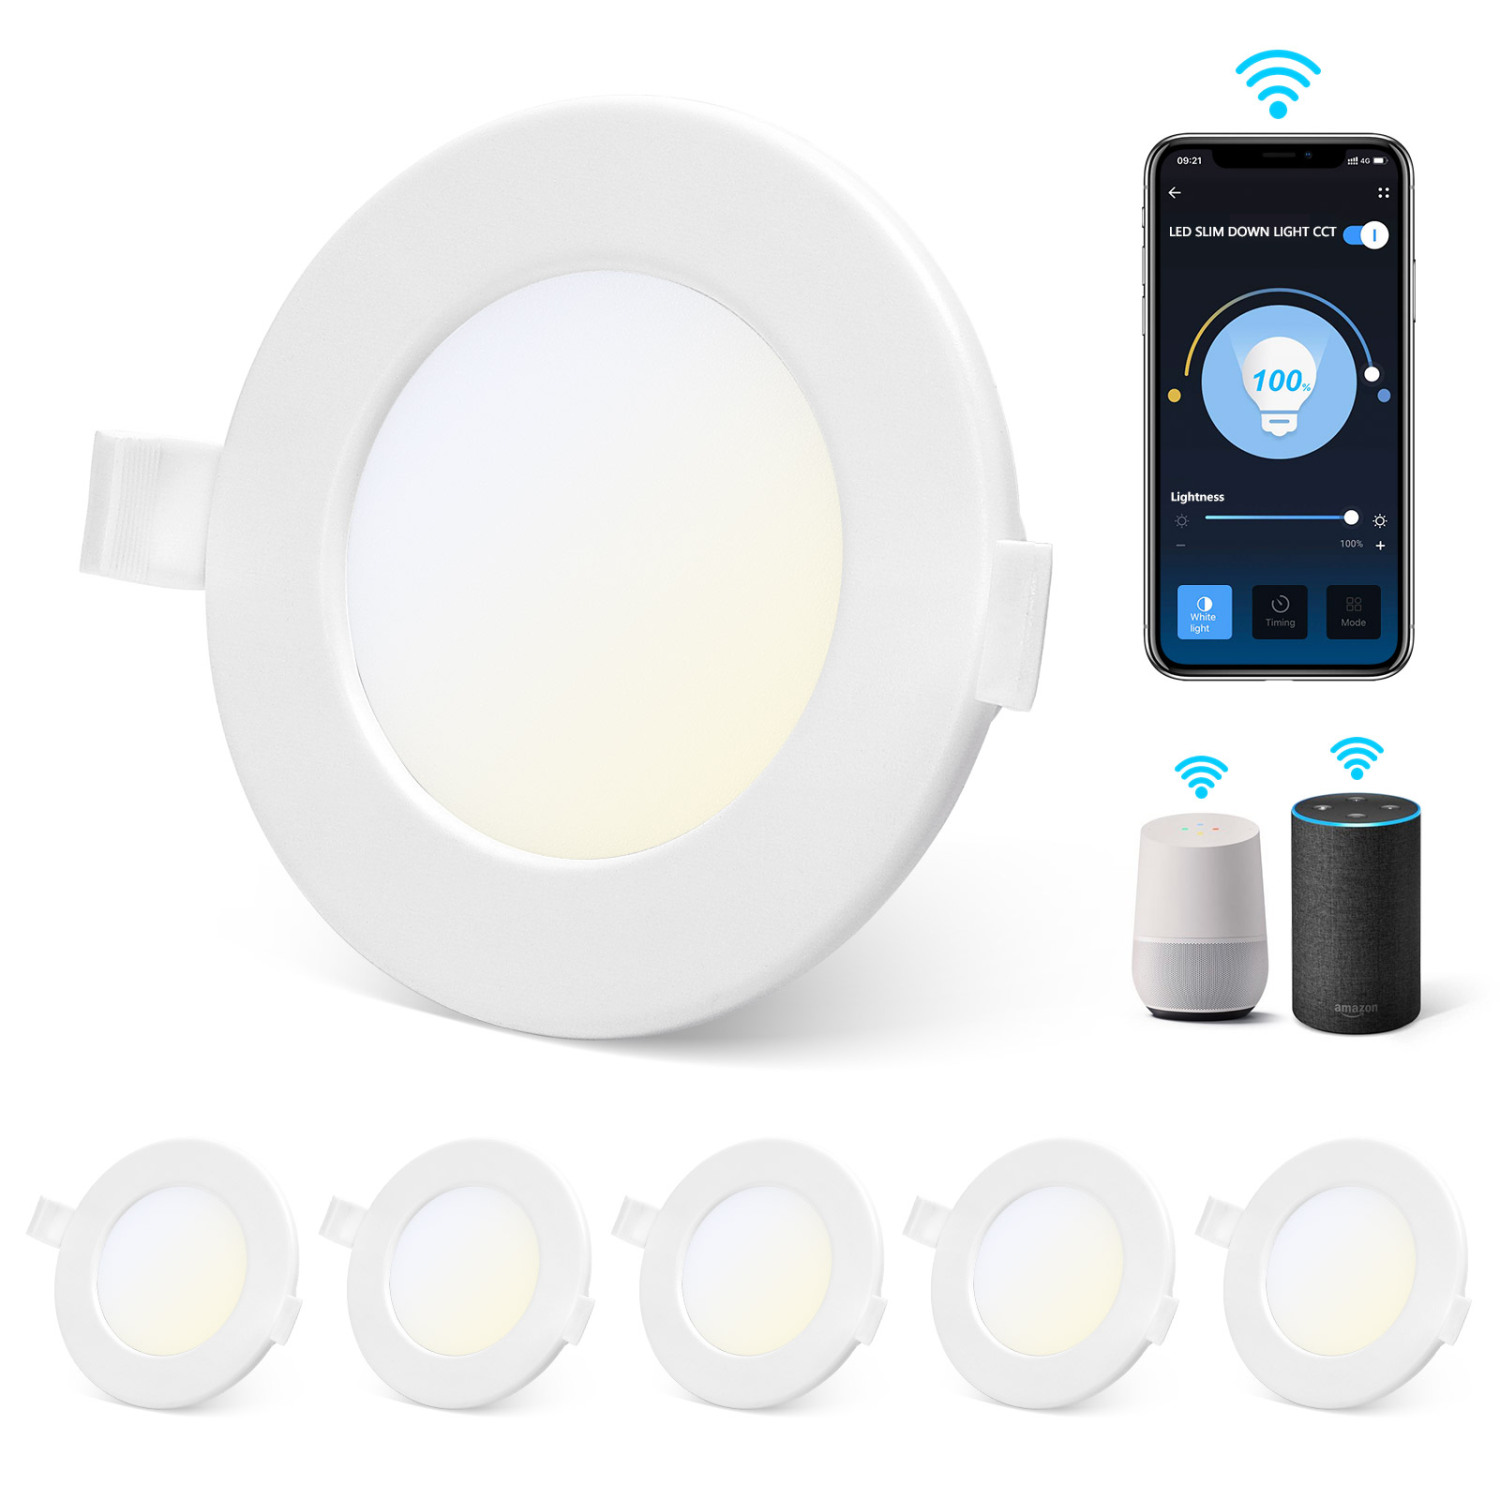 Aigostar Slim Downlight LED inteligente Wifi, 6W, CCT. Regulable de luz cálida a blanca 3000-6500K, 360lm. Compatible Alexa y Google Home. Foco empotrable: 11,5 x 3,2 cm alto. [Clase energética A +] Pack de 5 uds.